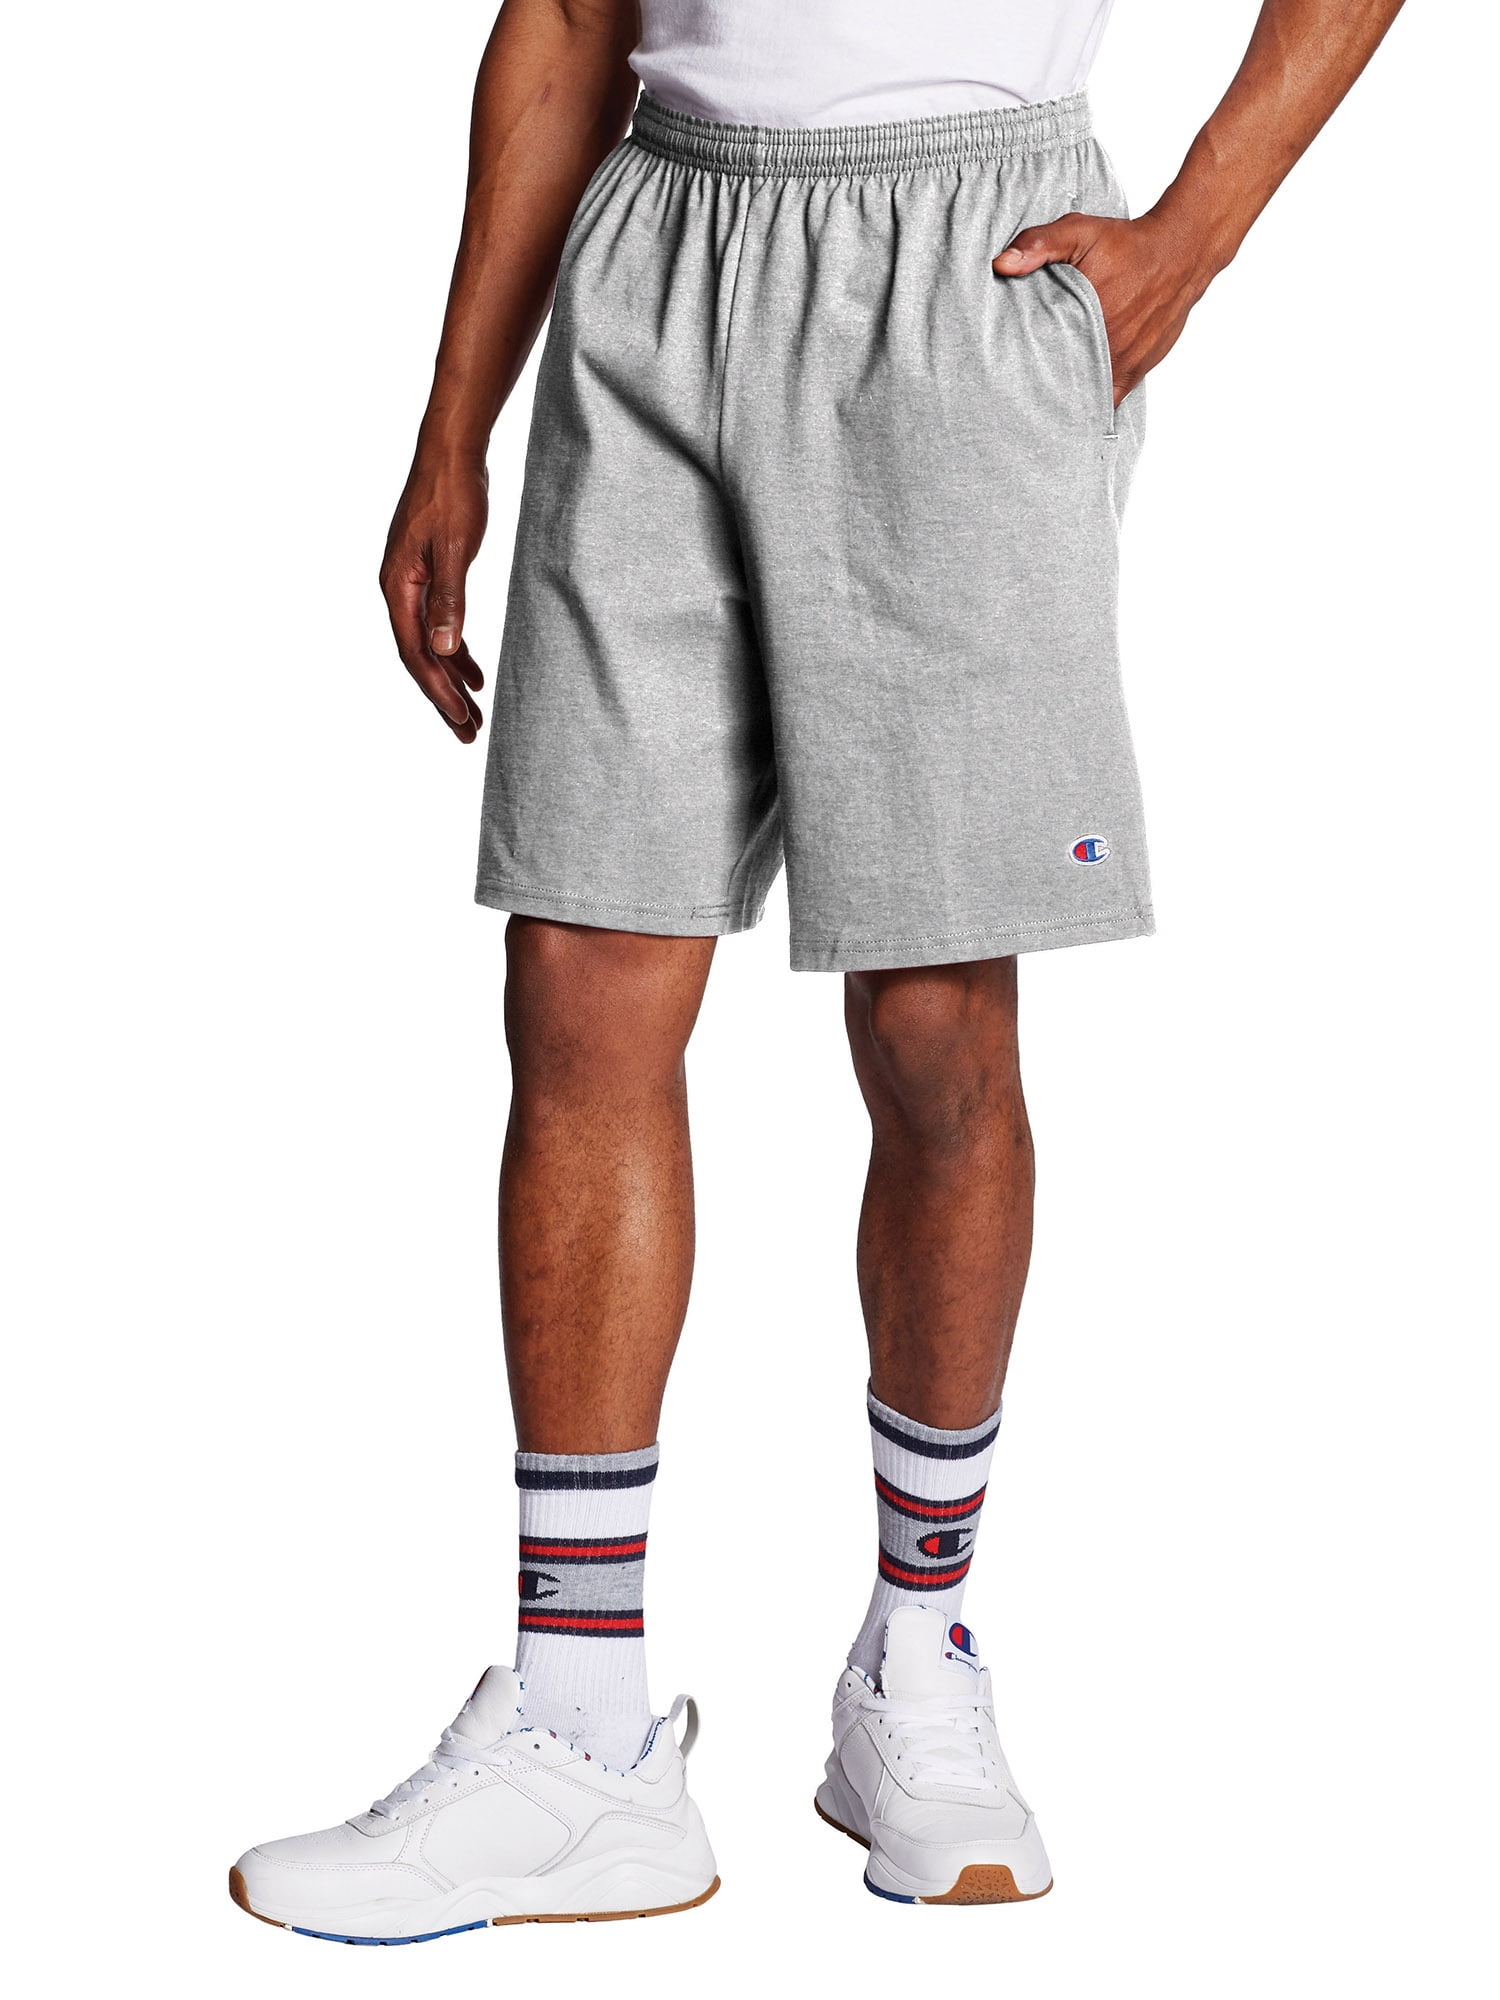 Champion Authentic Cotton 9" Shorts with Pockets, up Size 4XL - Walmart.com